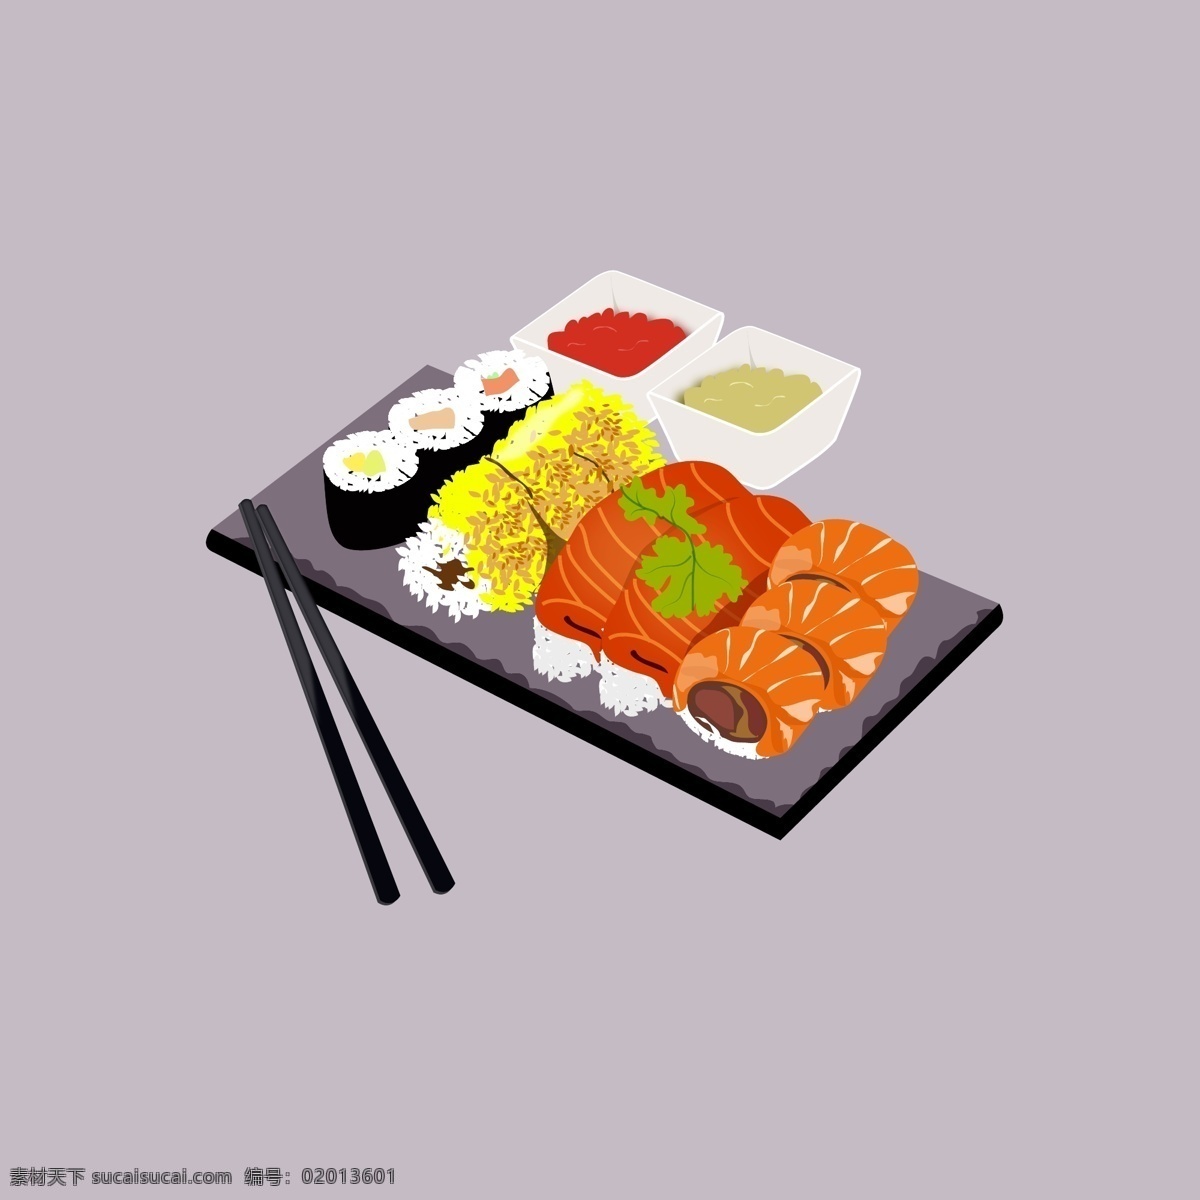 原创 插画 日本料理 美食 插图 矢量 寿司 装饰画